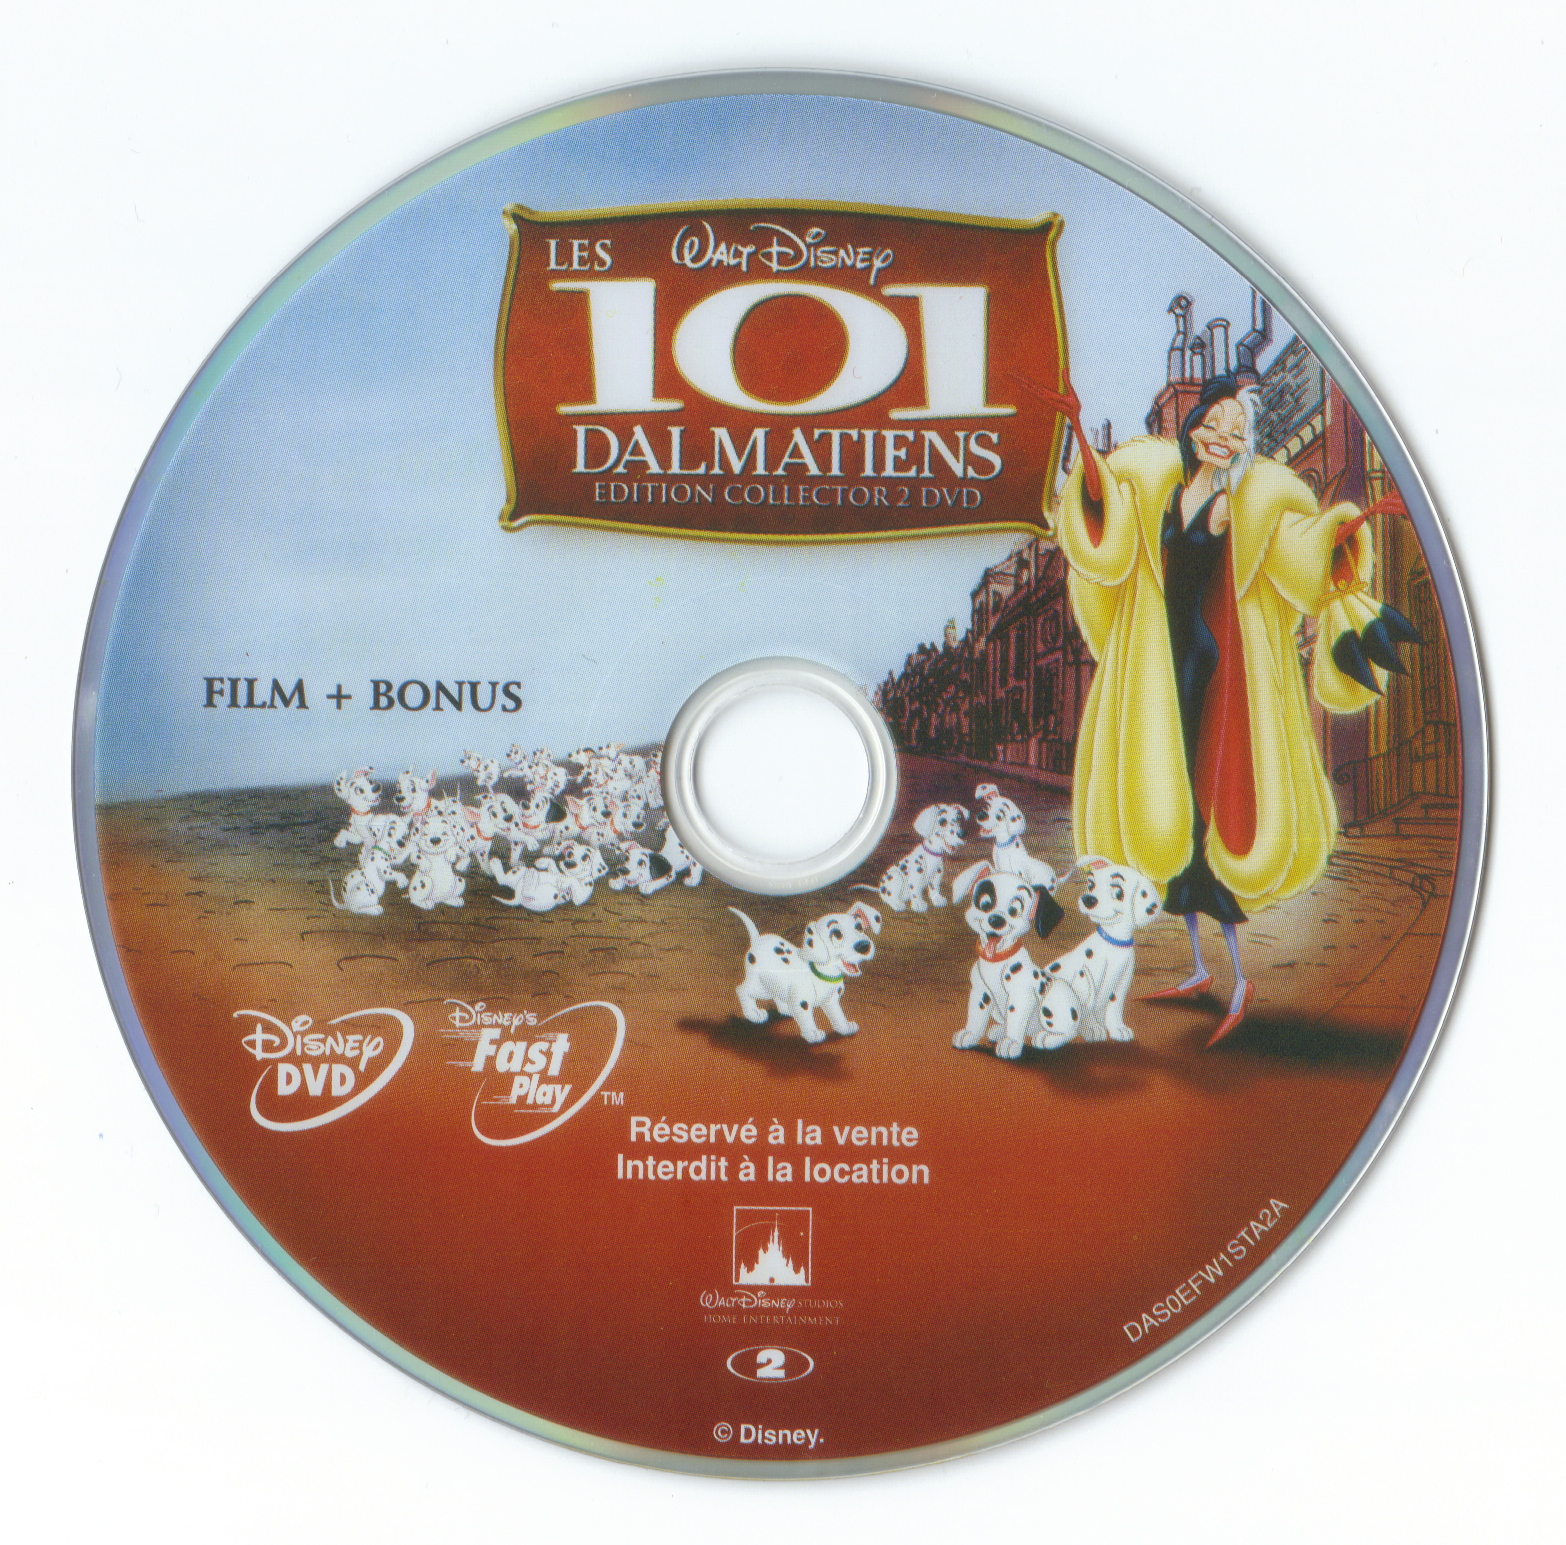 Les 101 dalmatiens DISC 1